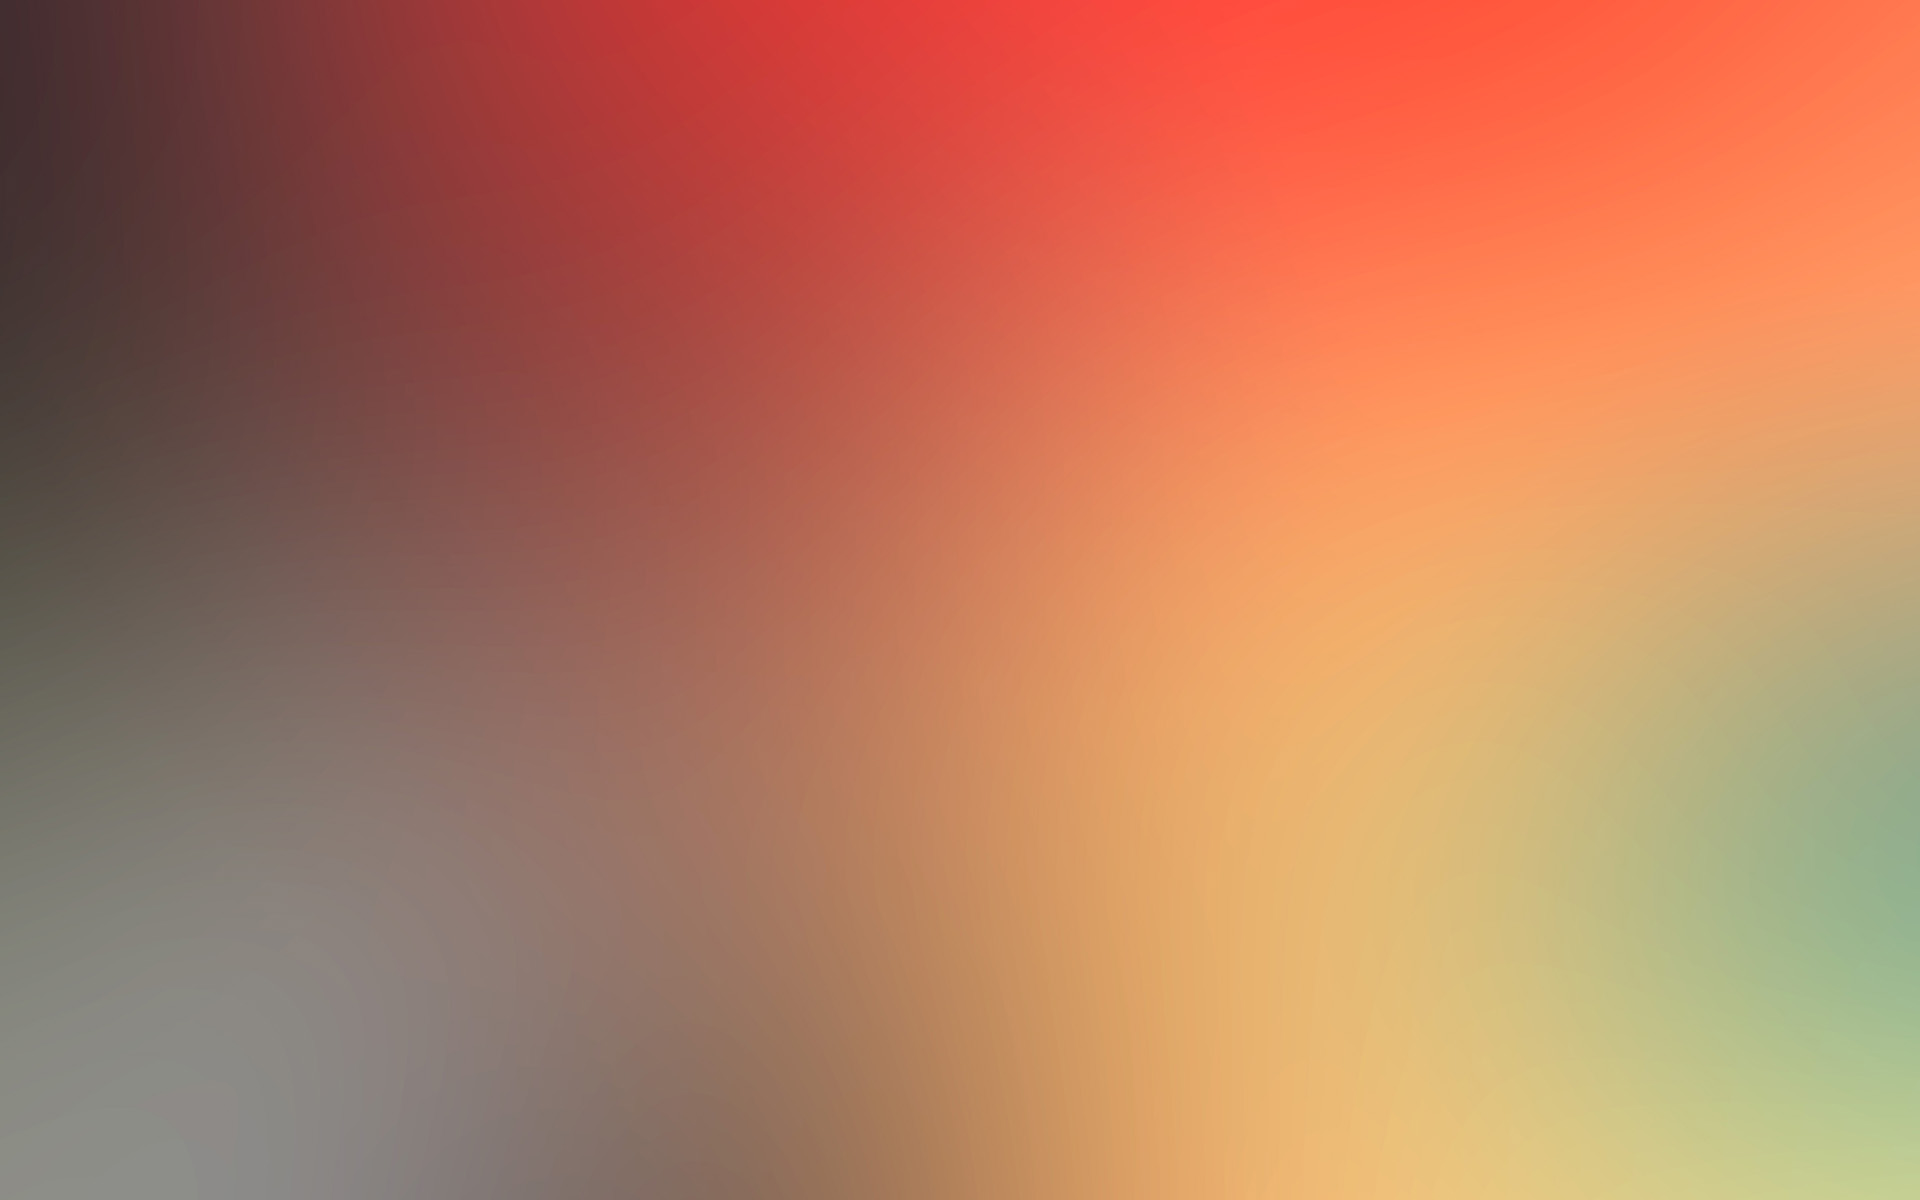 Marron-Mixed-High-resolution-blurr-background